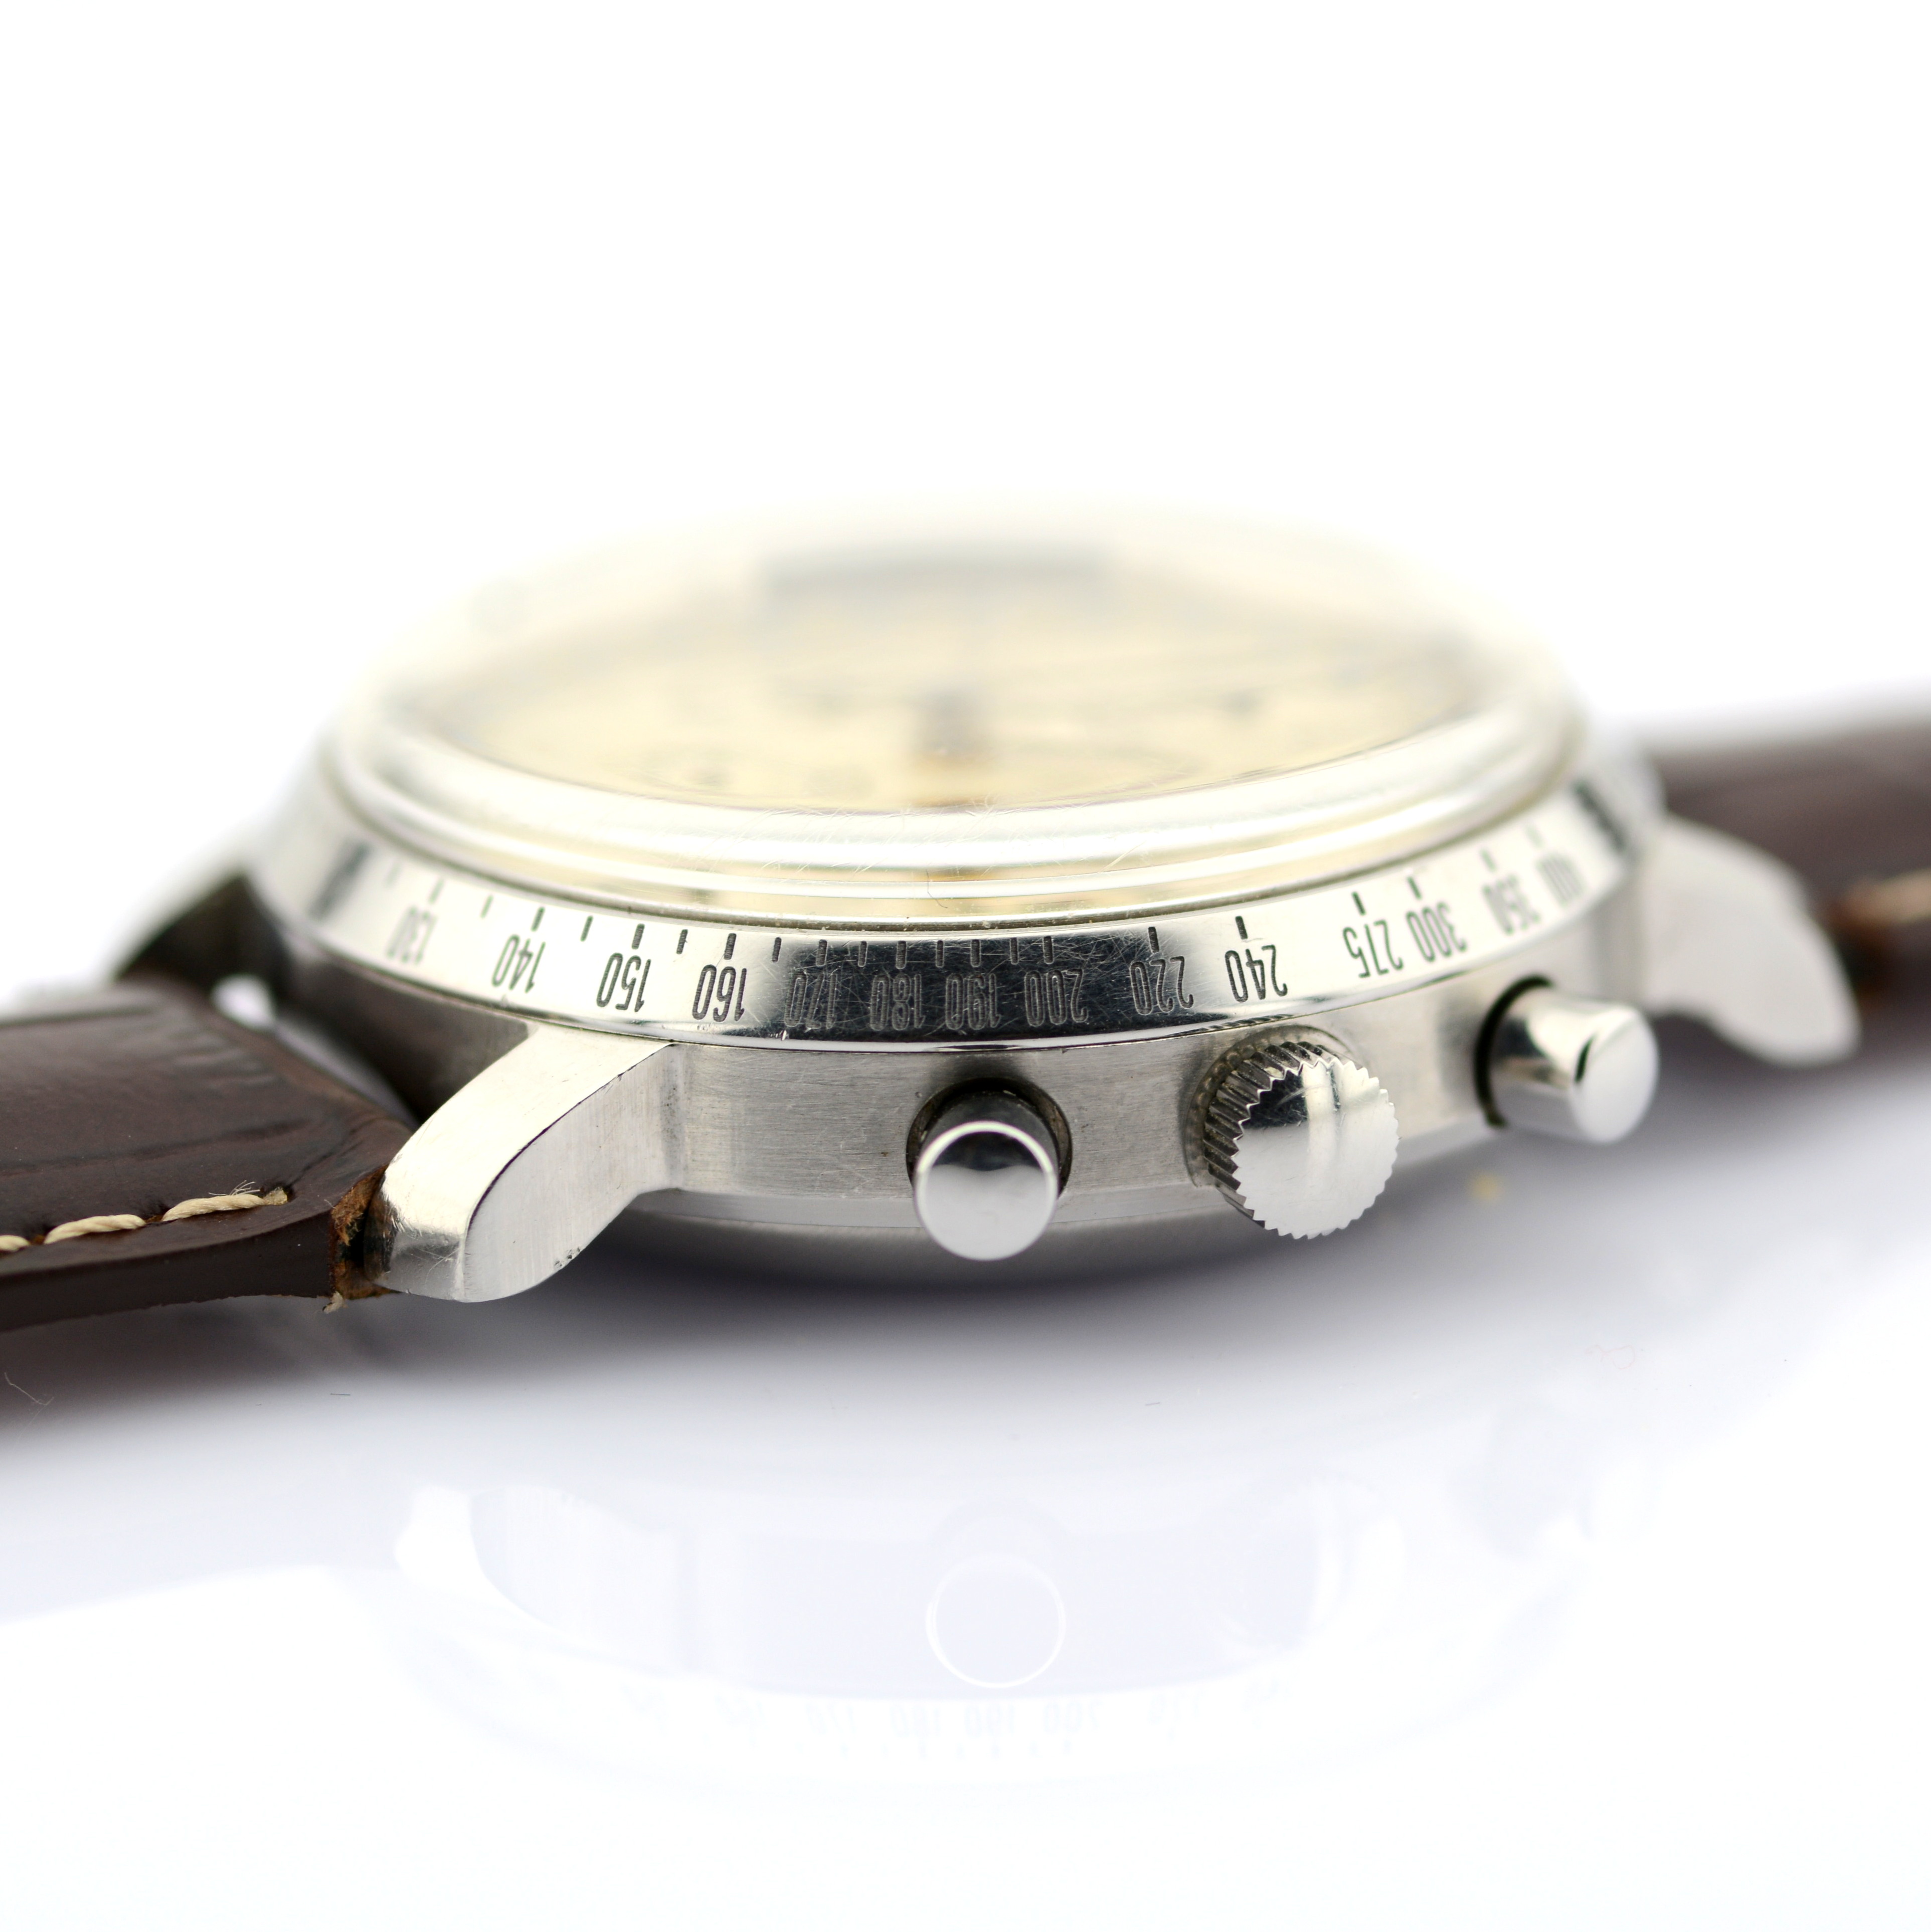 Eterna-Matic / Vintage Chronograph Automatic Day - Date - Gentlmen's Steel Wrist Watch - Image 8 of 11